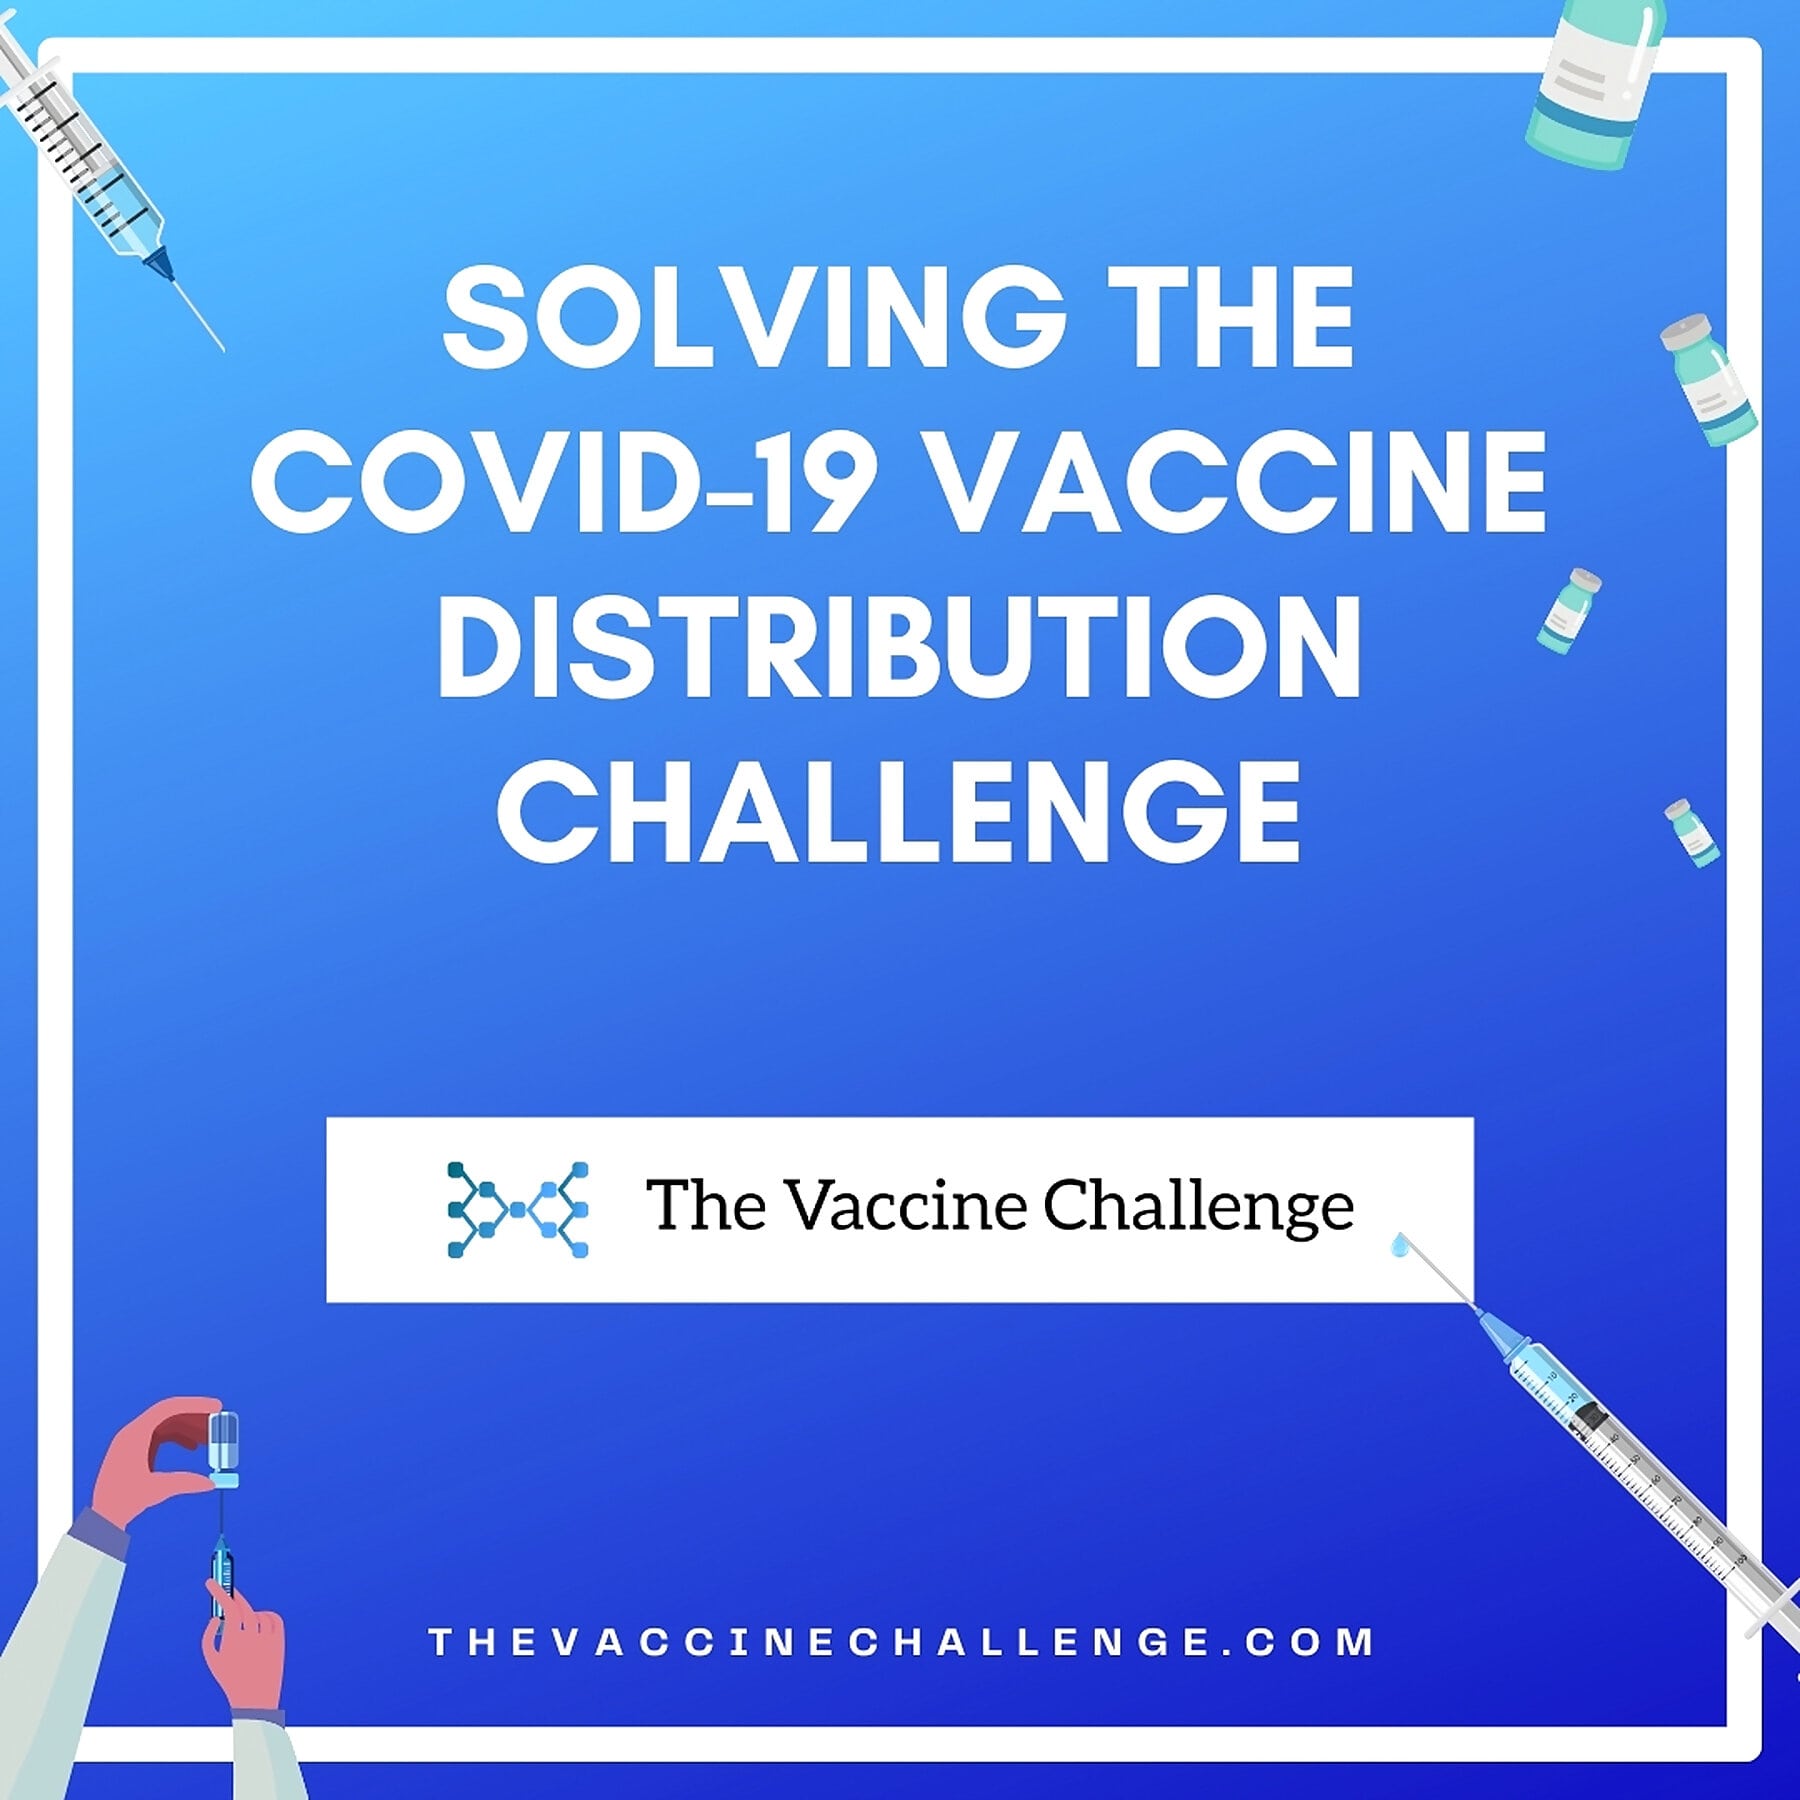 The Vaccine Challenge